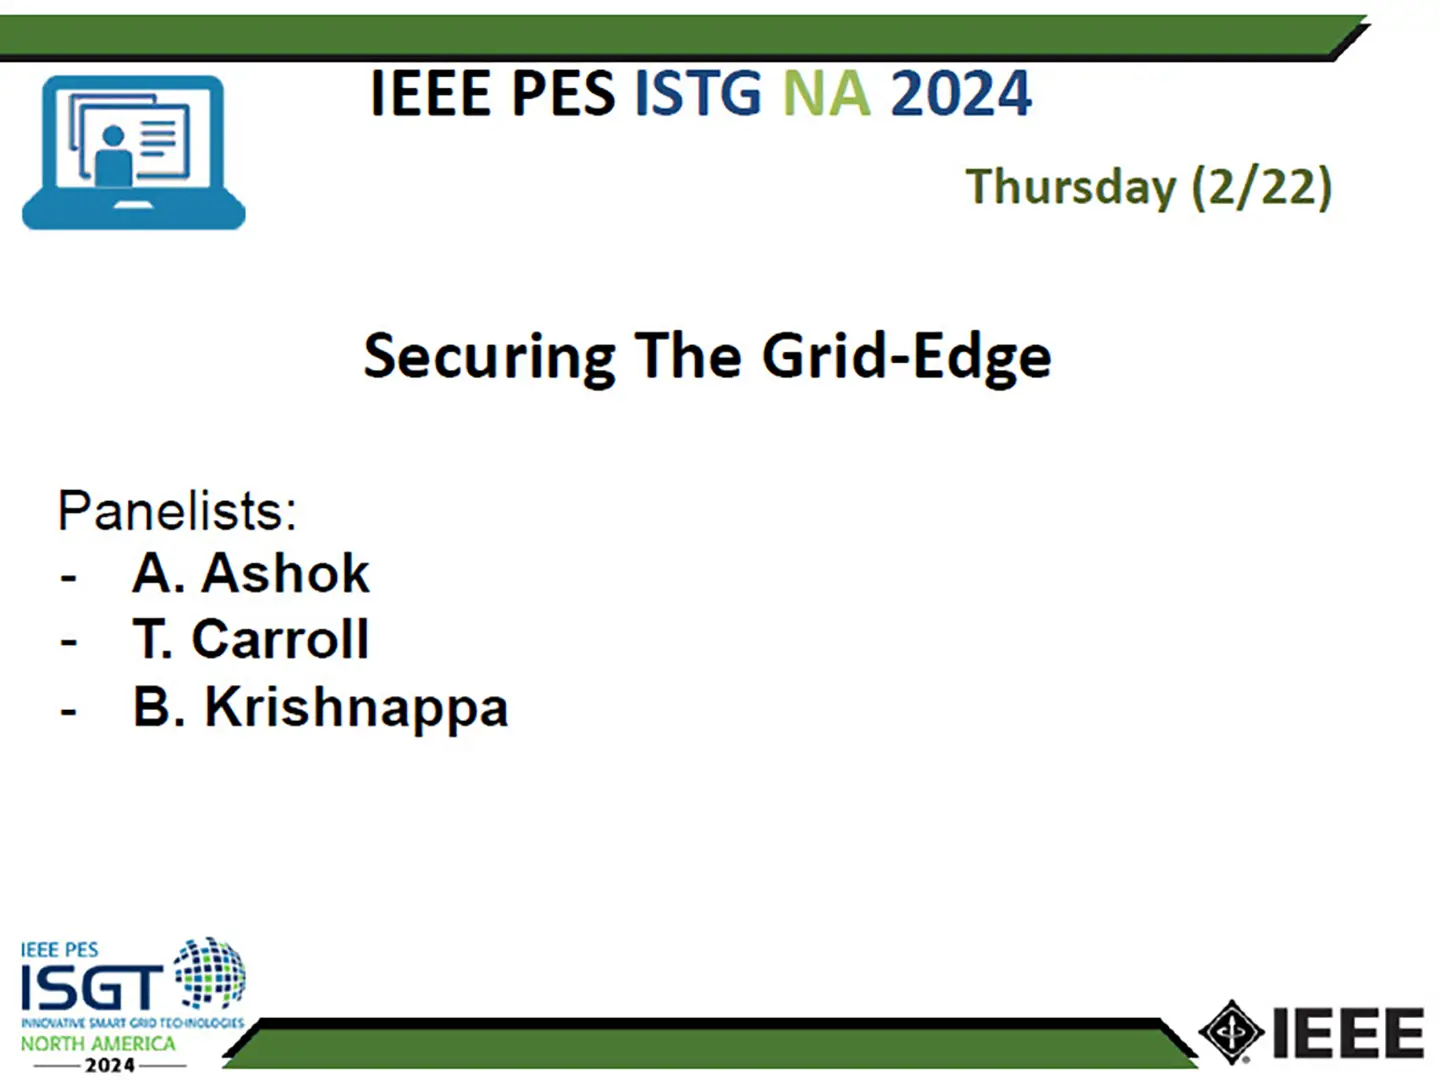 Securing The Grid-Edge (slides)